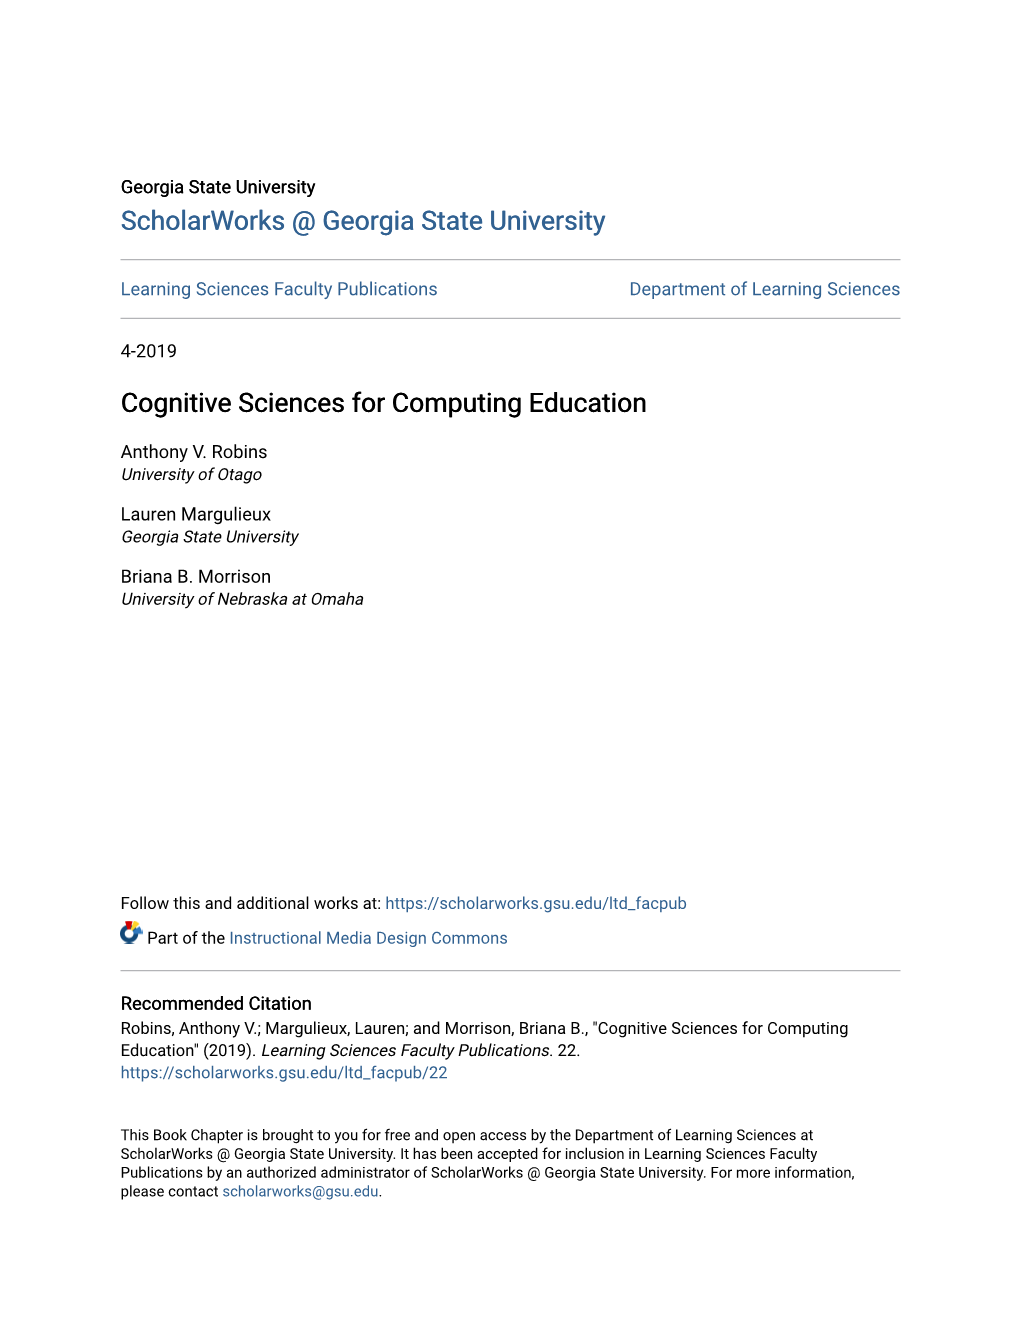 Cognitive Sciences for Computing Education